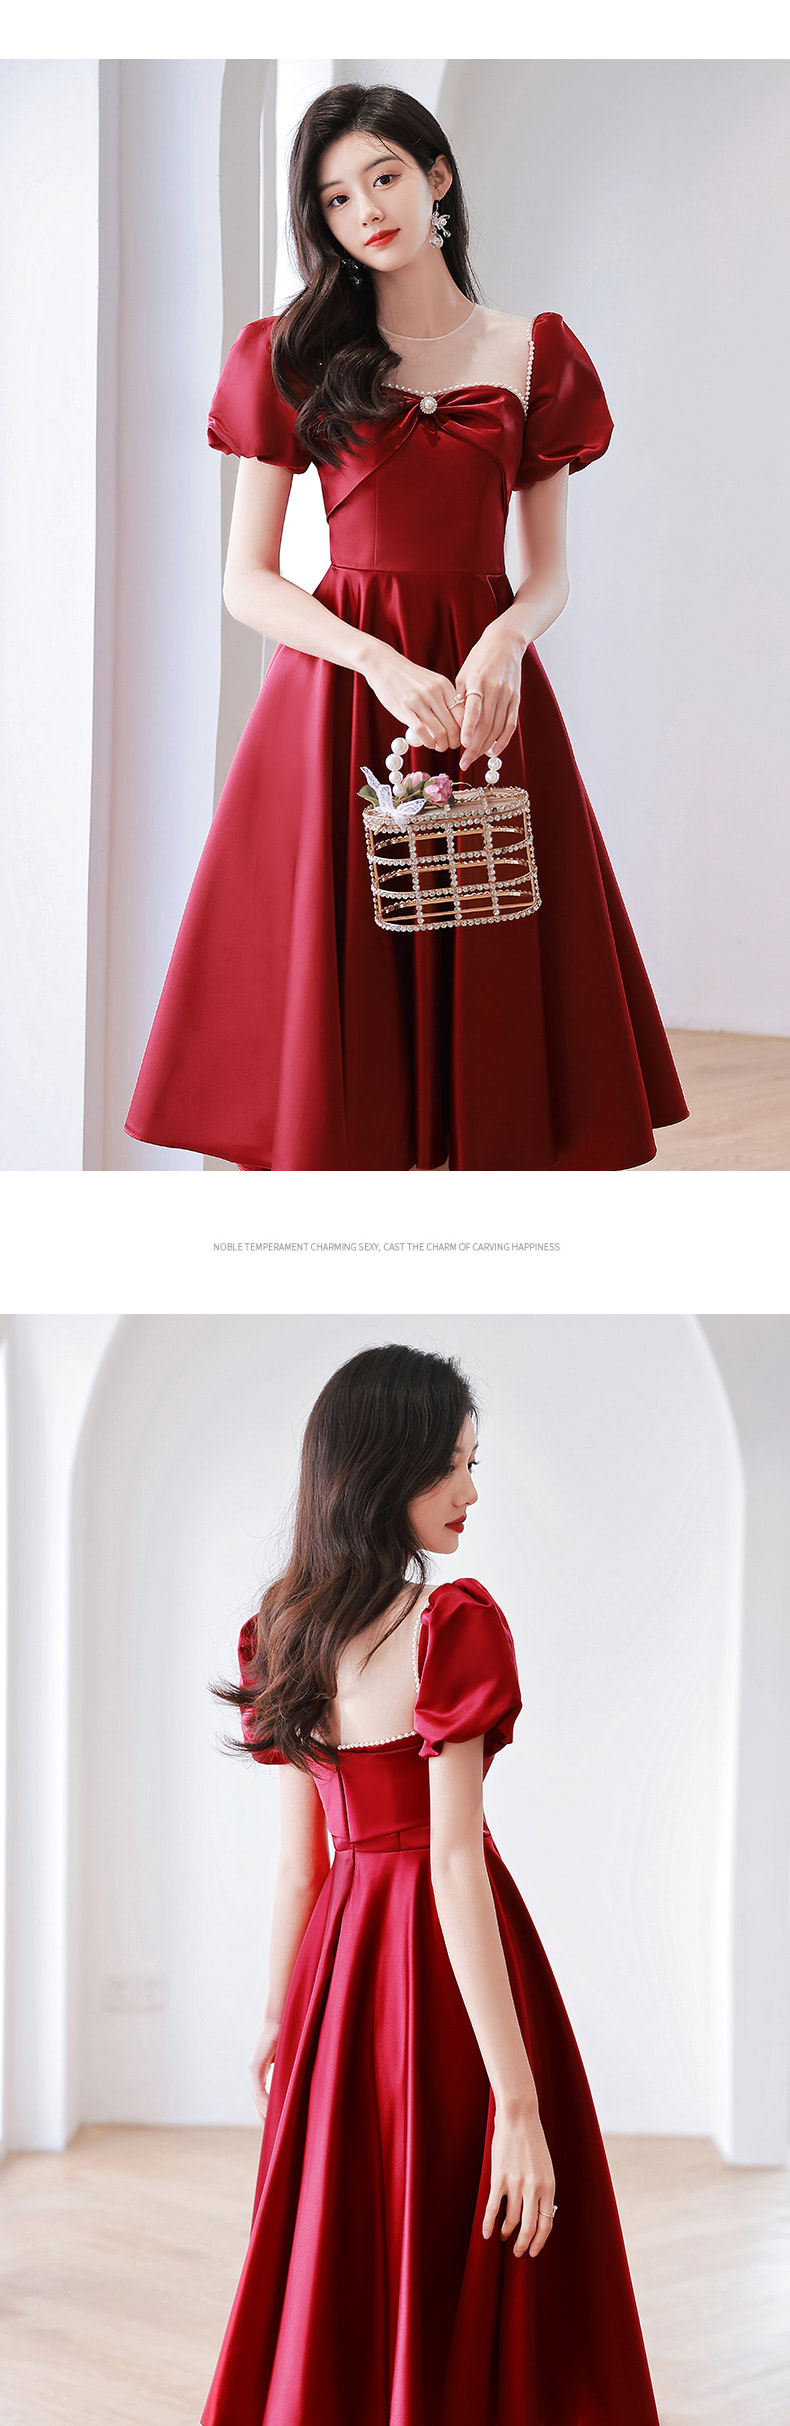 Fashion-Wine-Red-Evening-Gown-Formal-Midi-Satin-Prom-Dress14.jpg